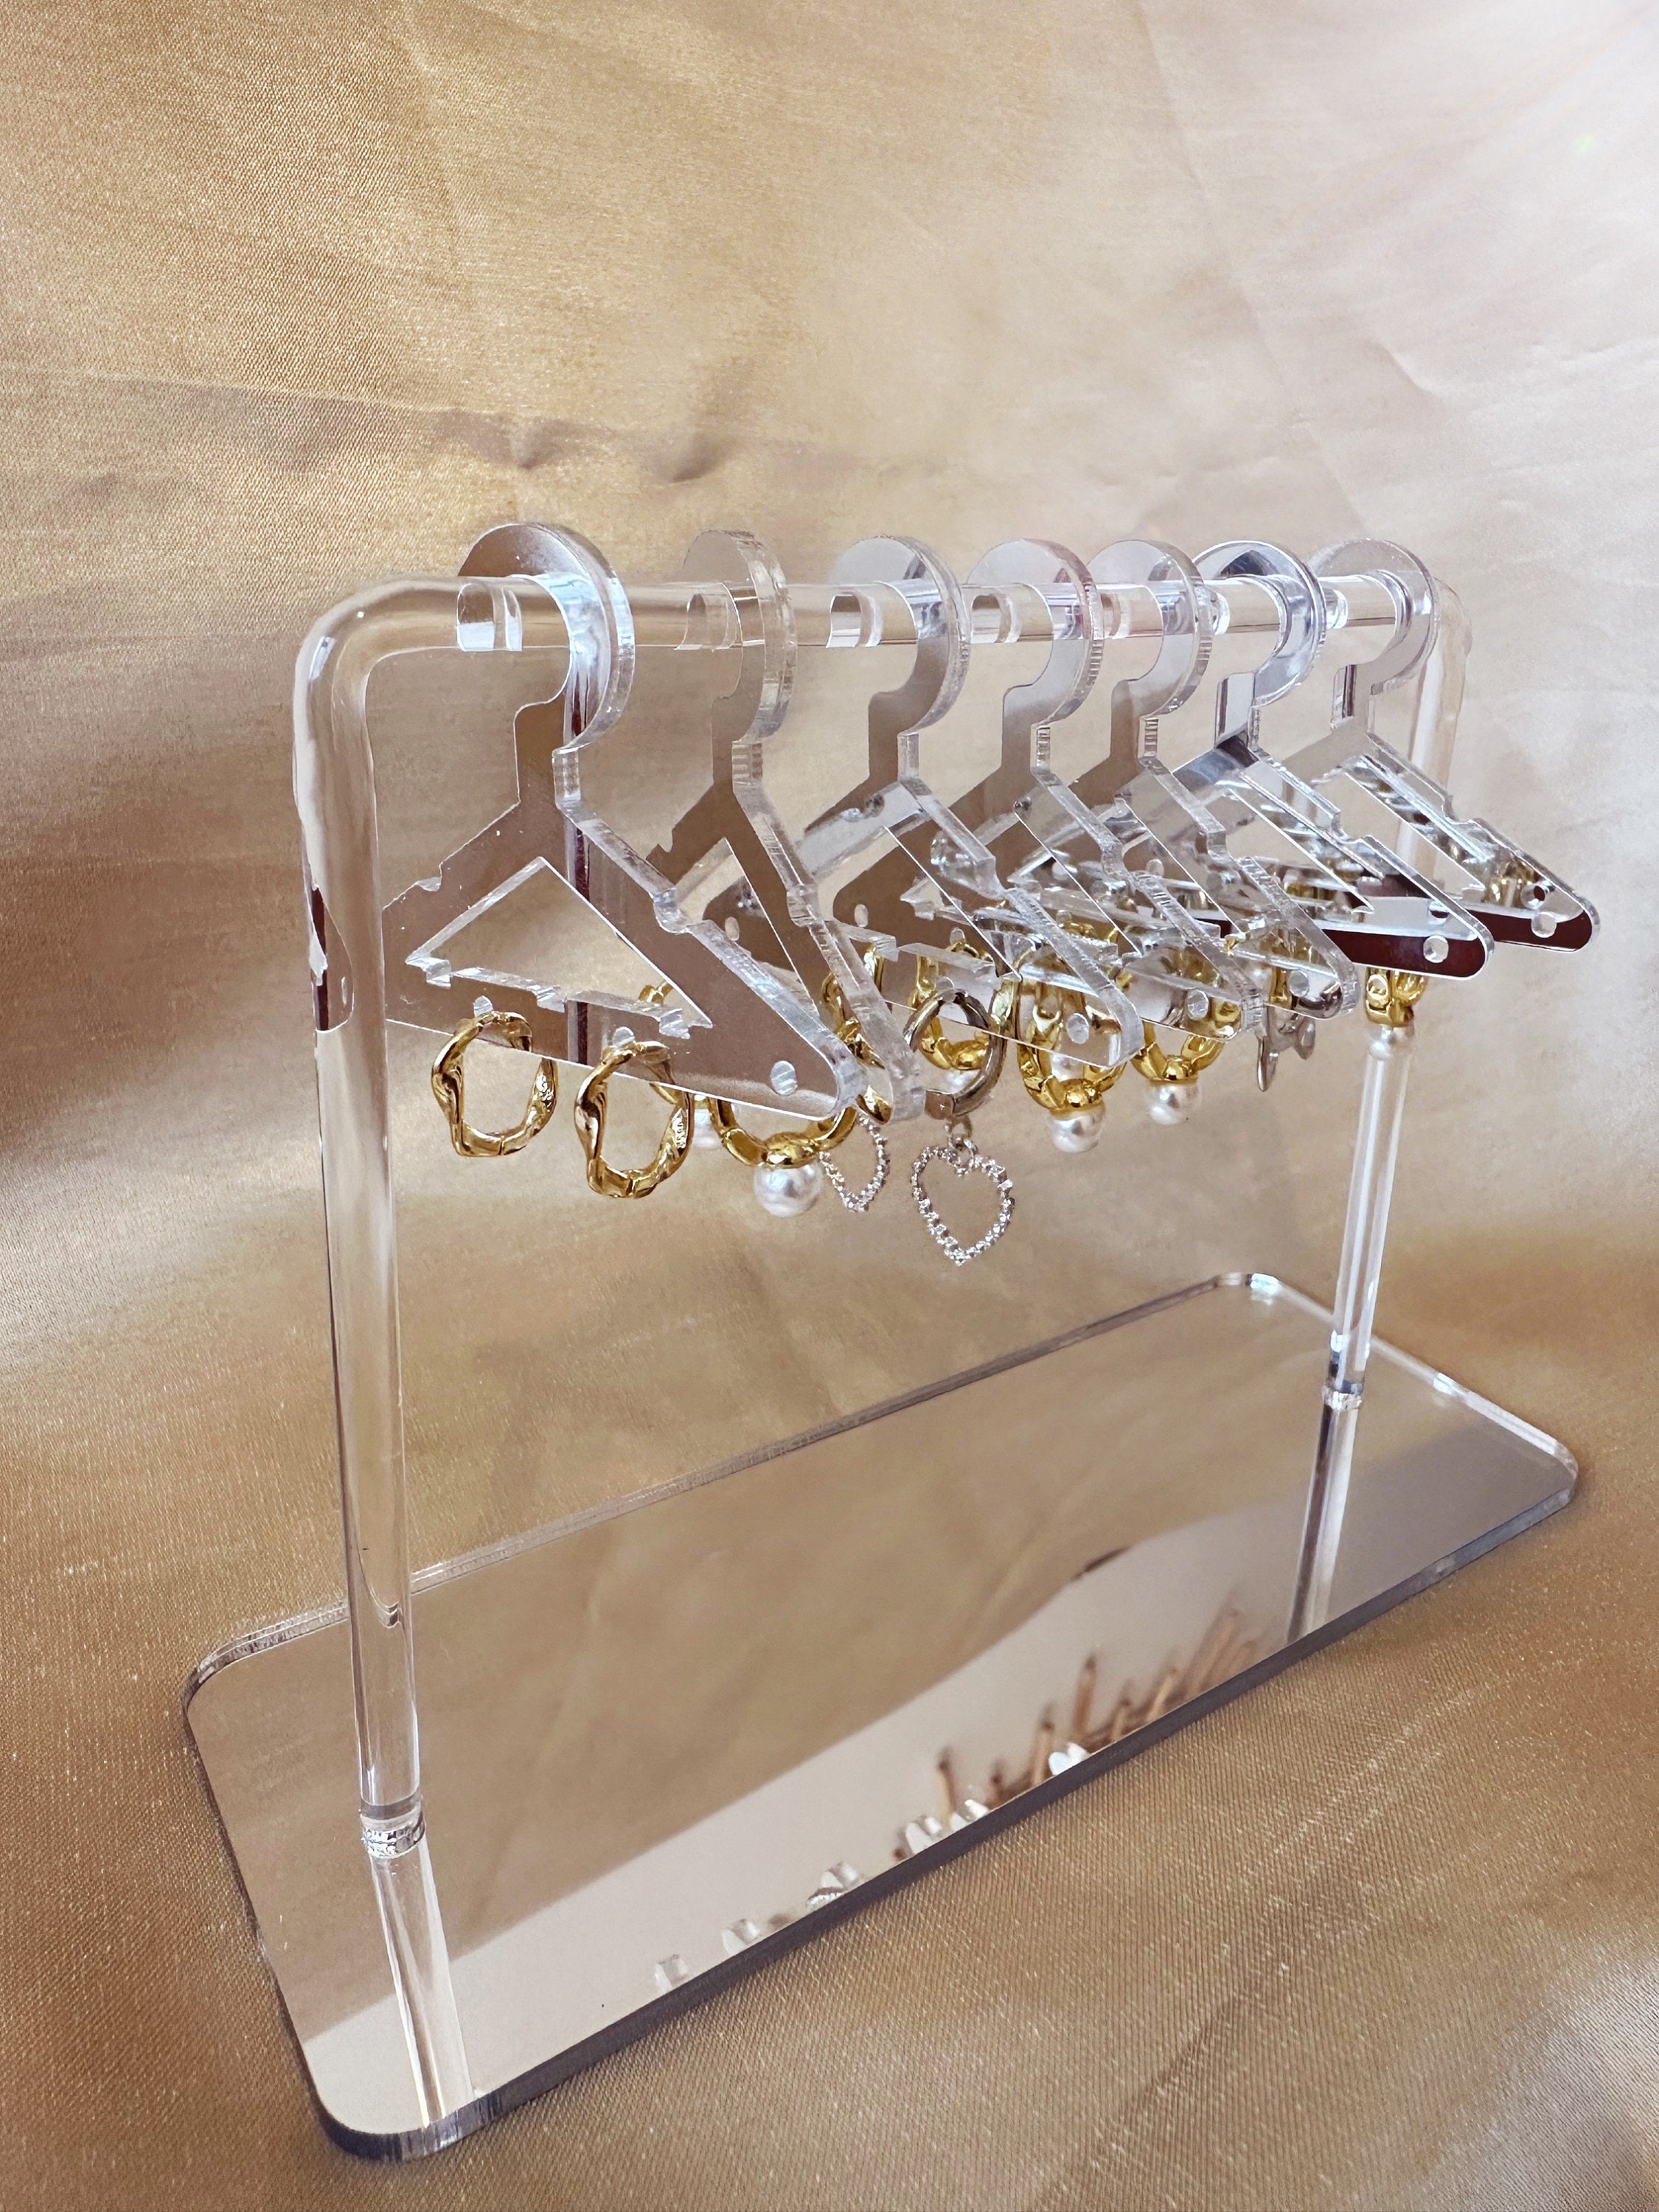 Clothing Rack Earring Hanger 2.0 - Textured Iridescent – Affordable Earrings  :)